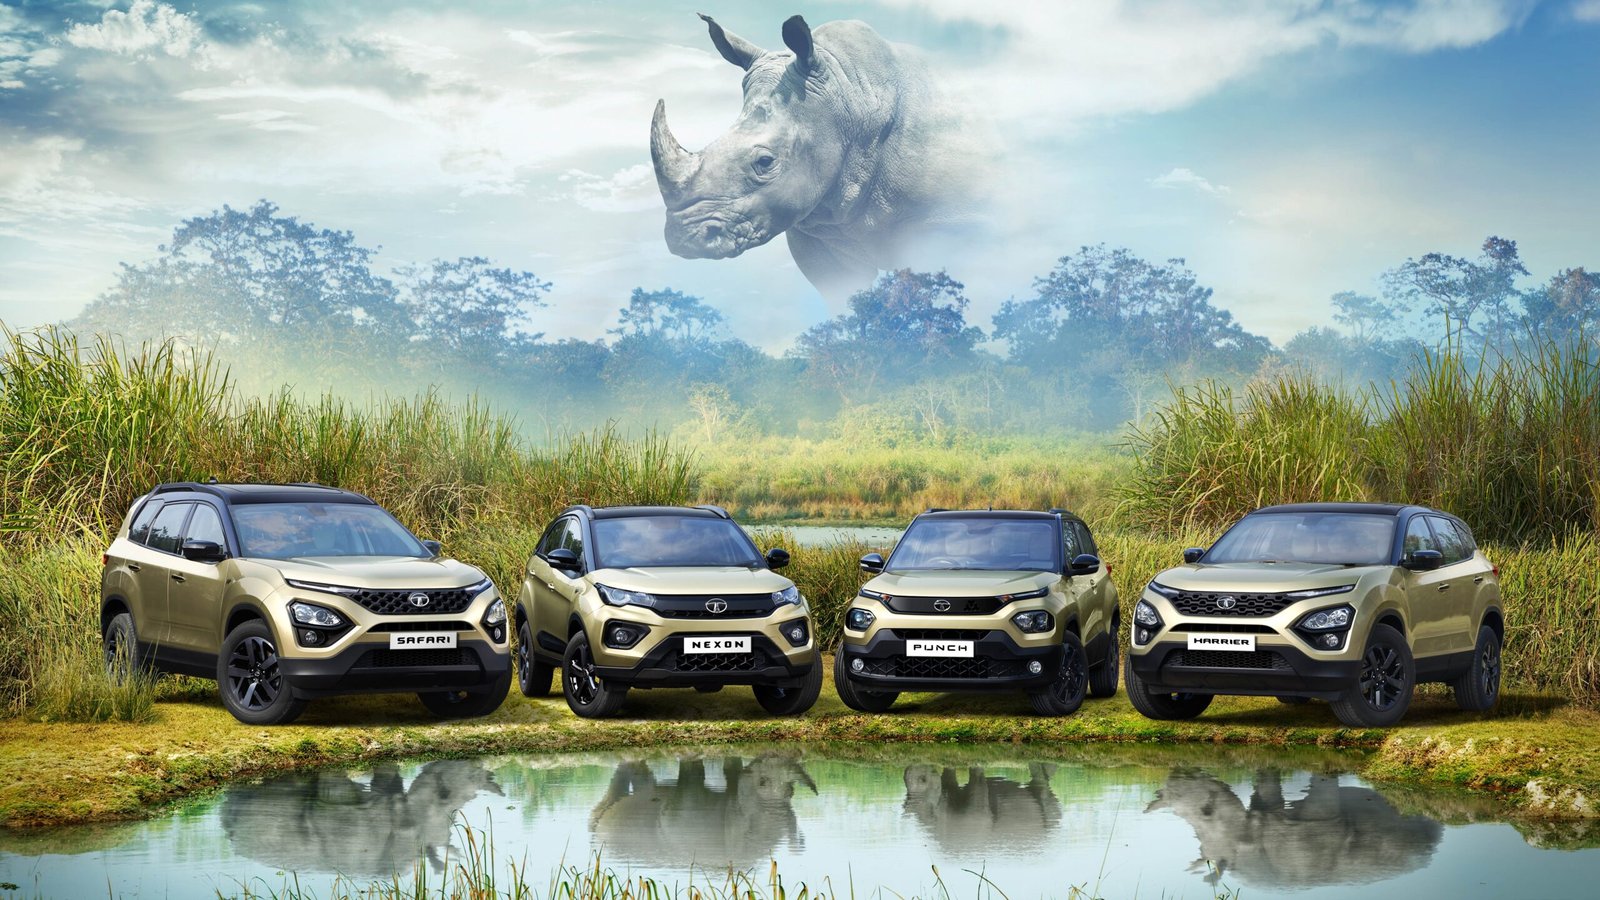 Tata Motors launches Kaziranga Edition across its SUV lineup